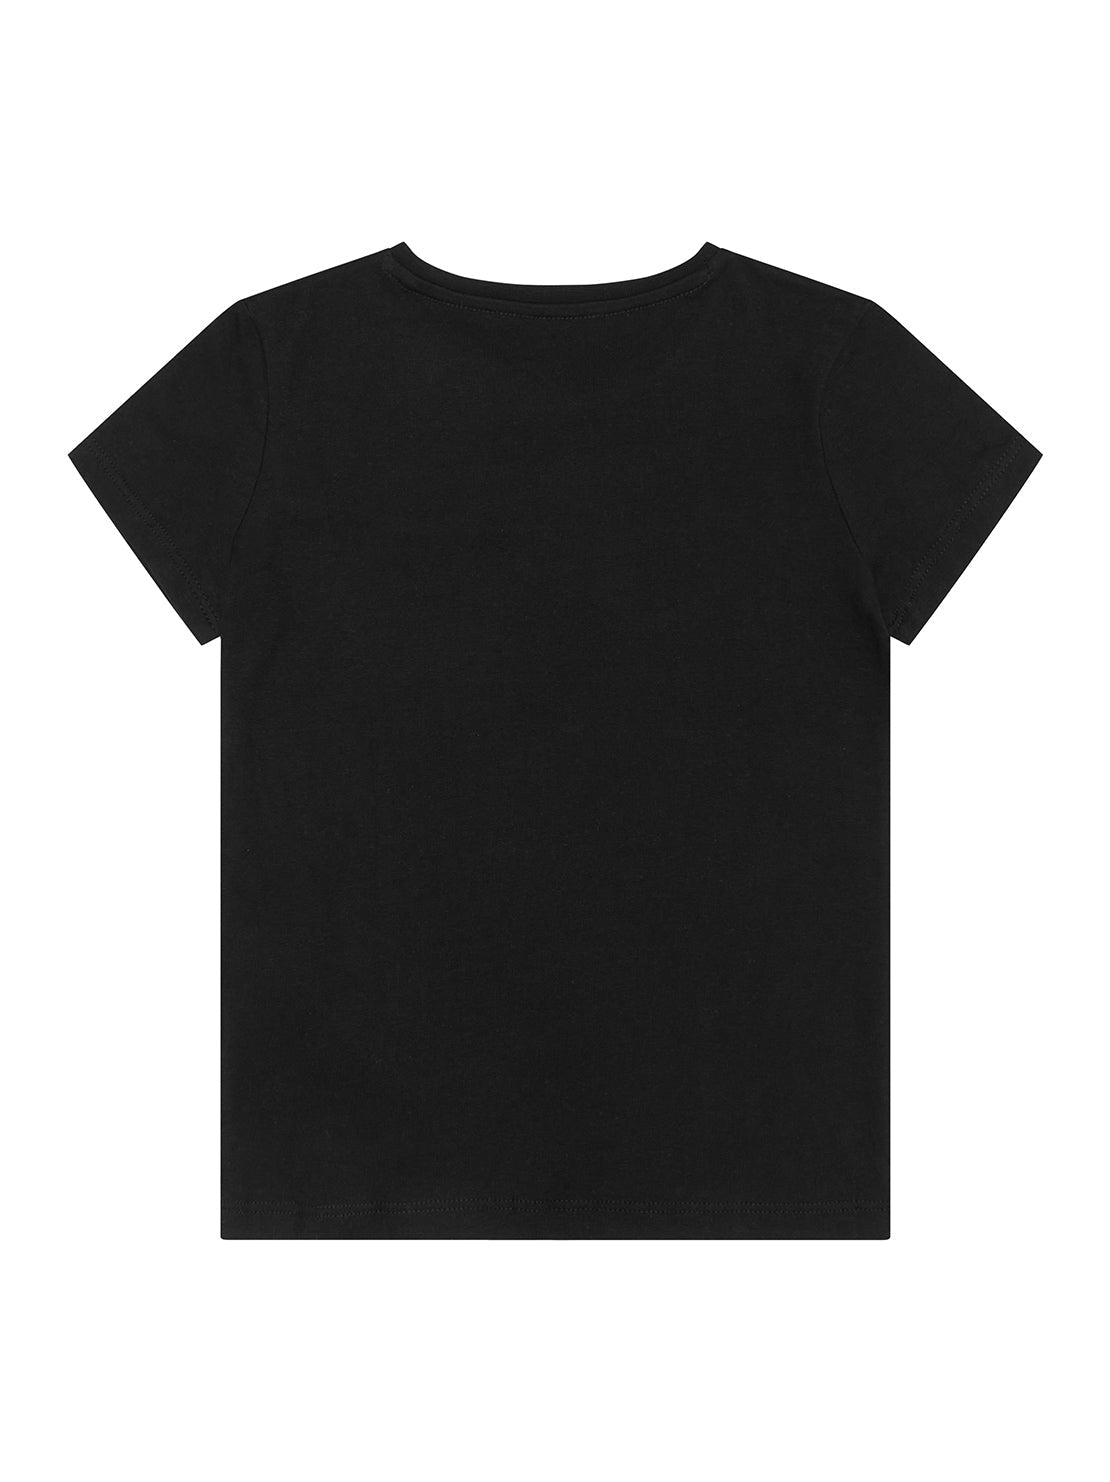 guess Sequin Black Kids T-Shirt (2-7) back view 